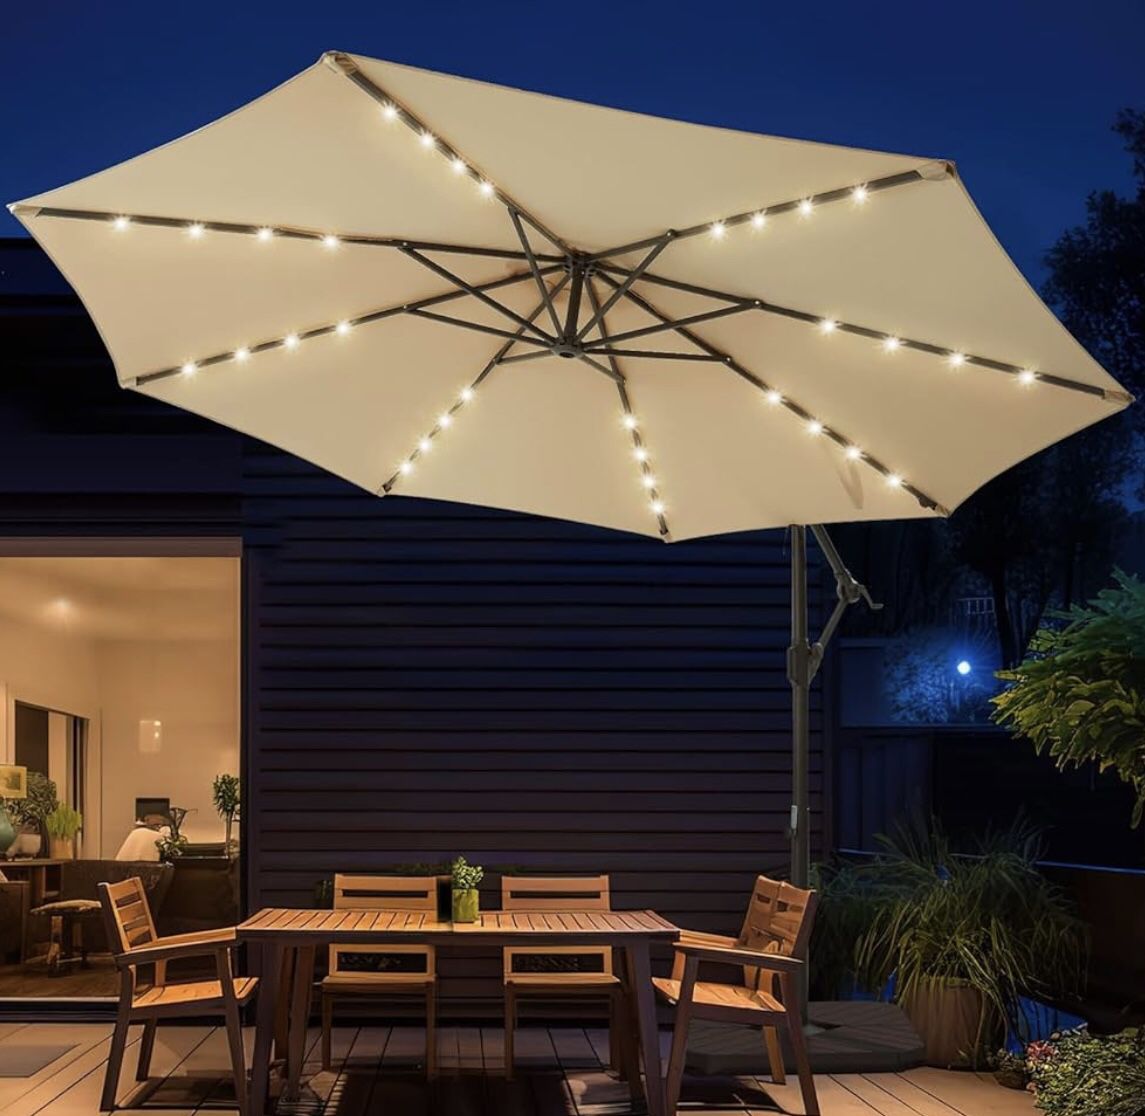 10ft Solar LED Offset Hanging Market Patio Umbrella for Backyard, Poolside, Lawn and Garden,Easy Tilt Adjustment, Polyester Shade & Cross Base, Beige